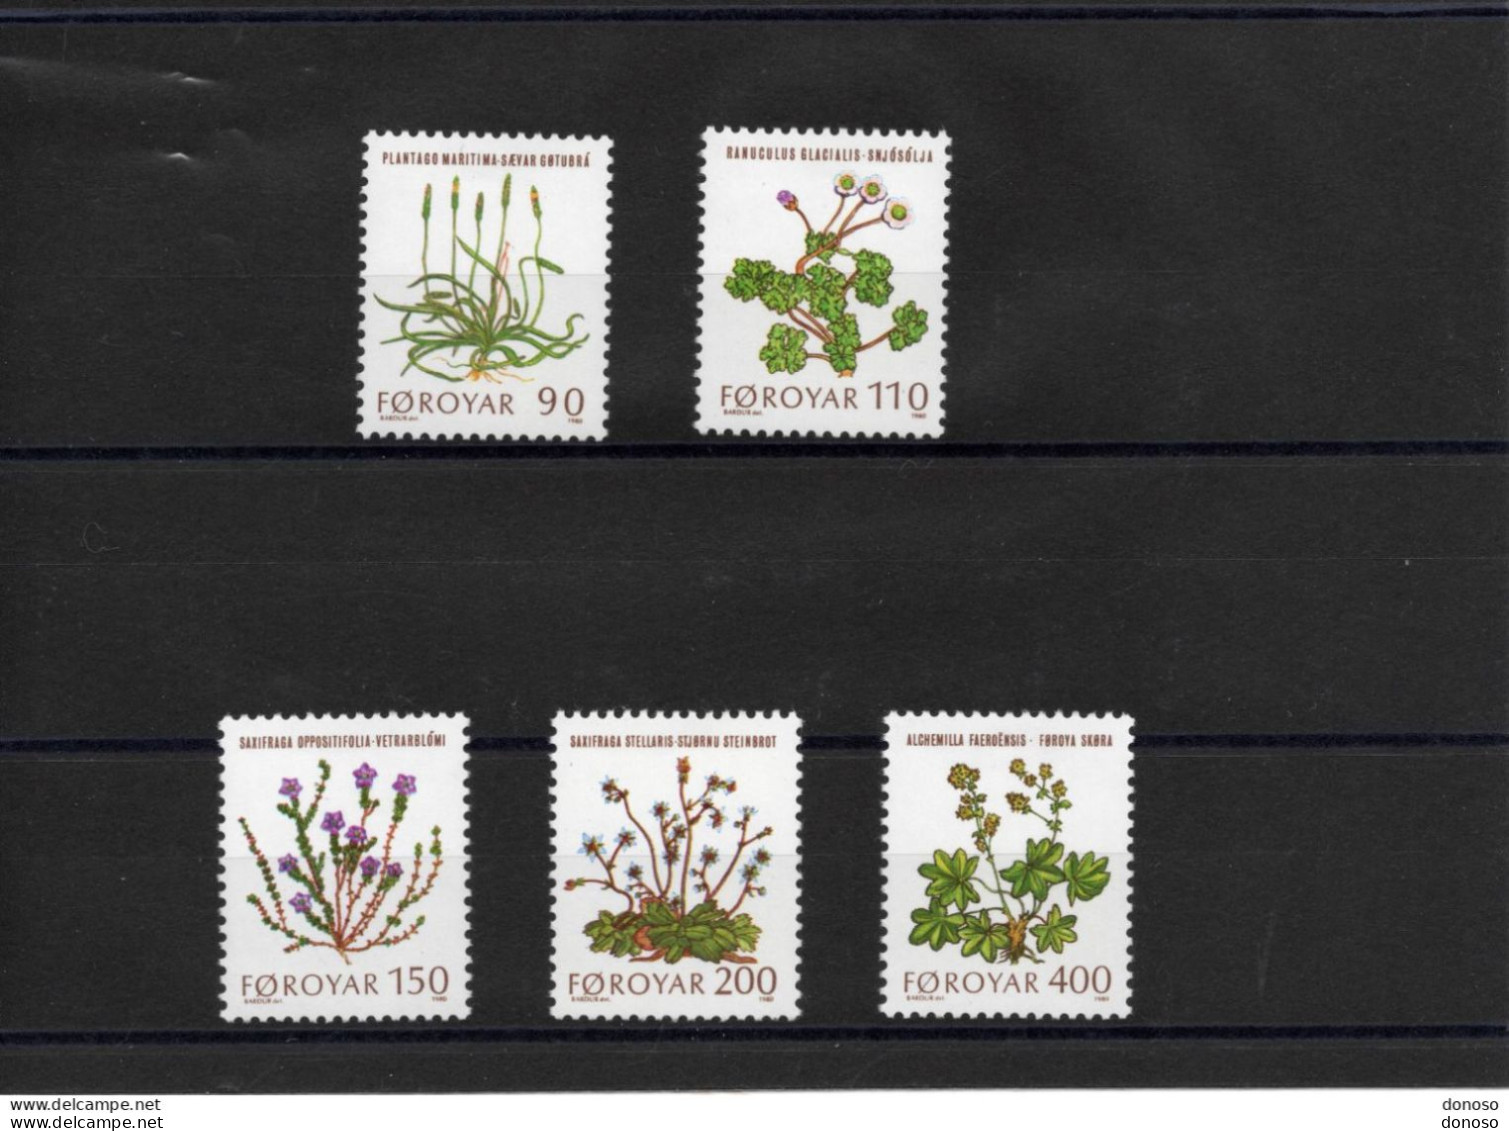 FEROË 1980 Fleurs Sauvages Yvert 42-46, Michel 48-52 NEUF** MNH  Cote 4 Euros - Färöer Inseln